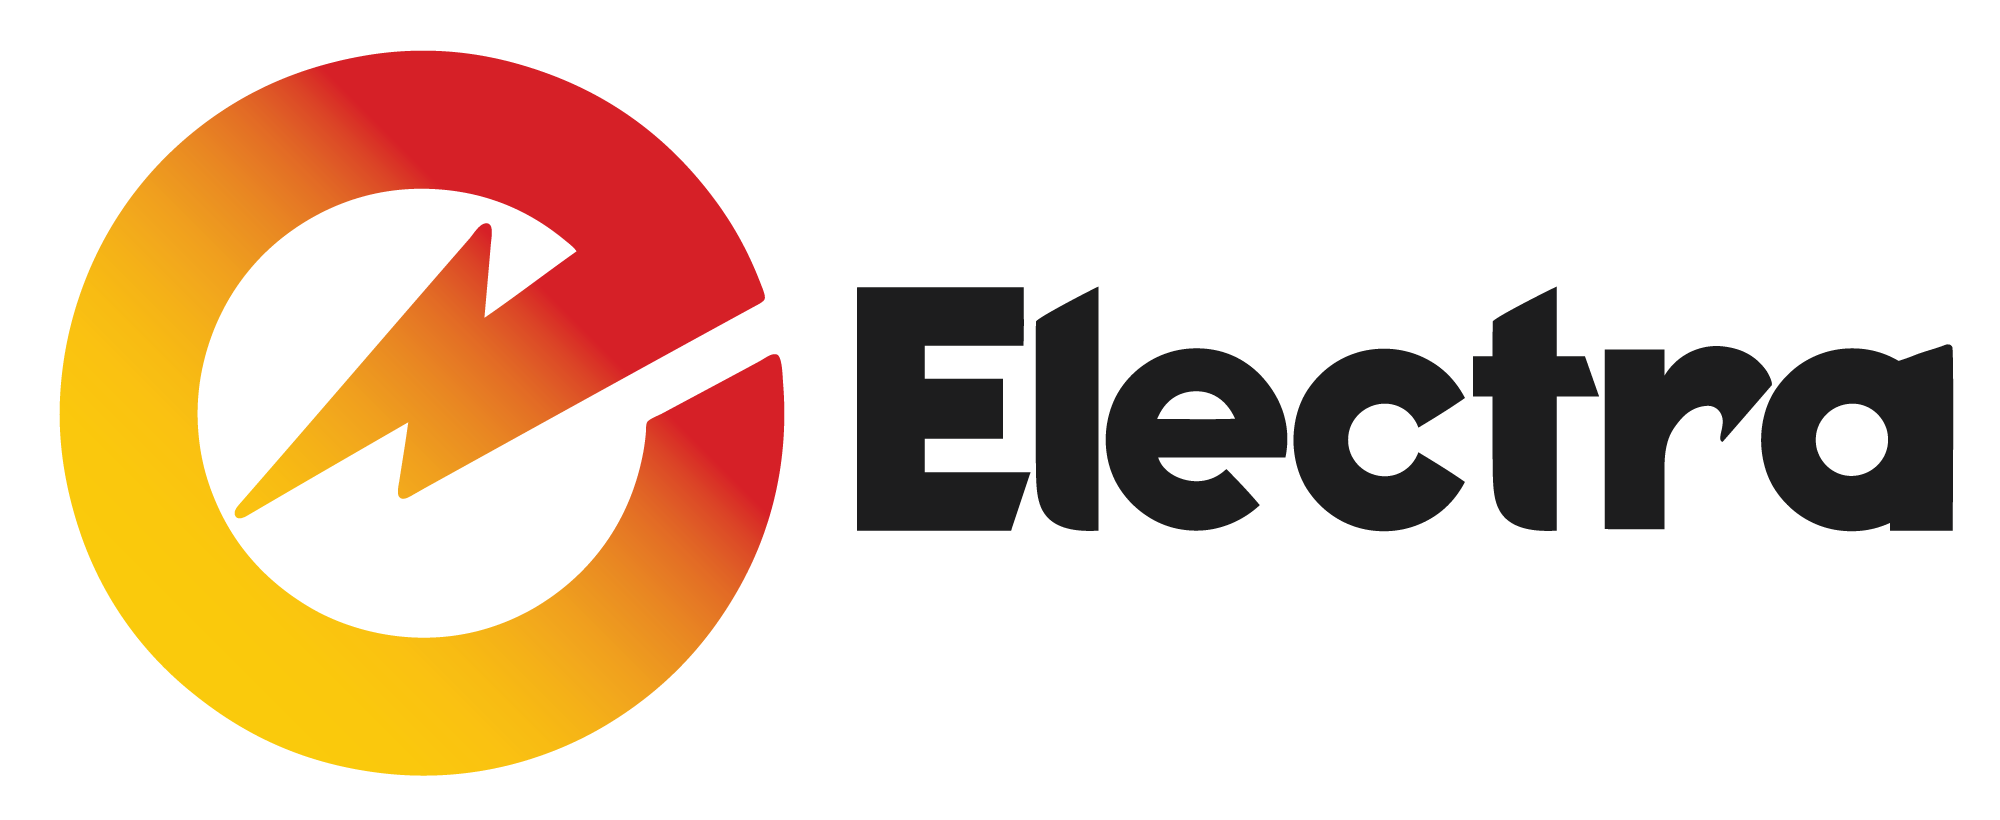 Фирма Электра. Energy Electra. Электра лого. Elektra Энергетик.